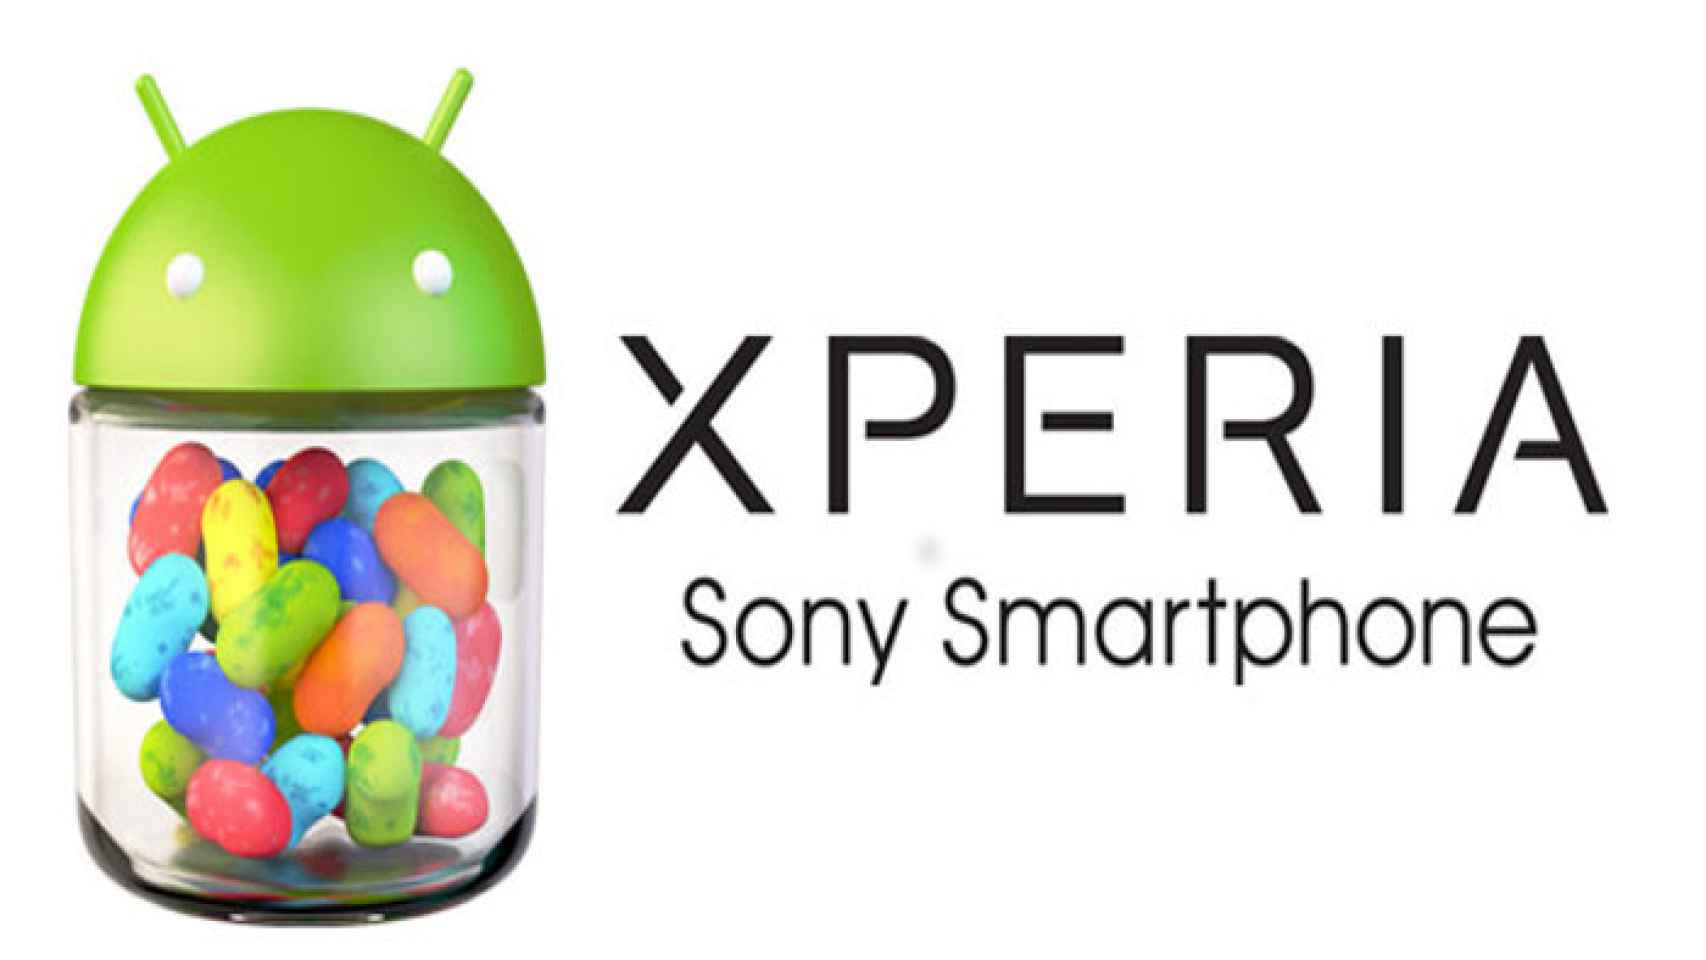 Actualización Android 4.3 Jelly Bean ya llega a: Xperia SP, Xperia T, Xperia TX y Xperia V